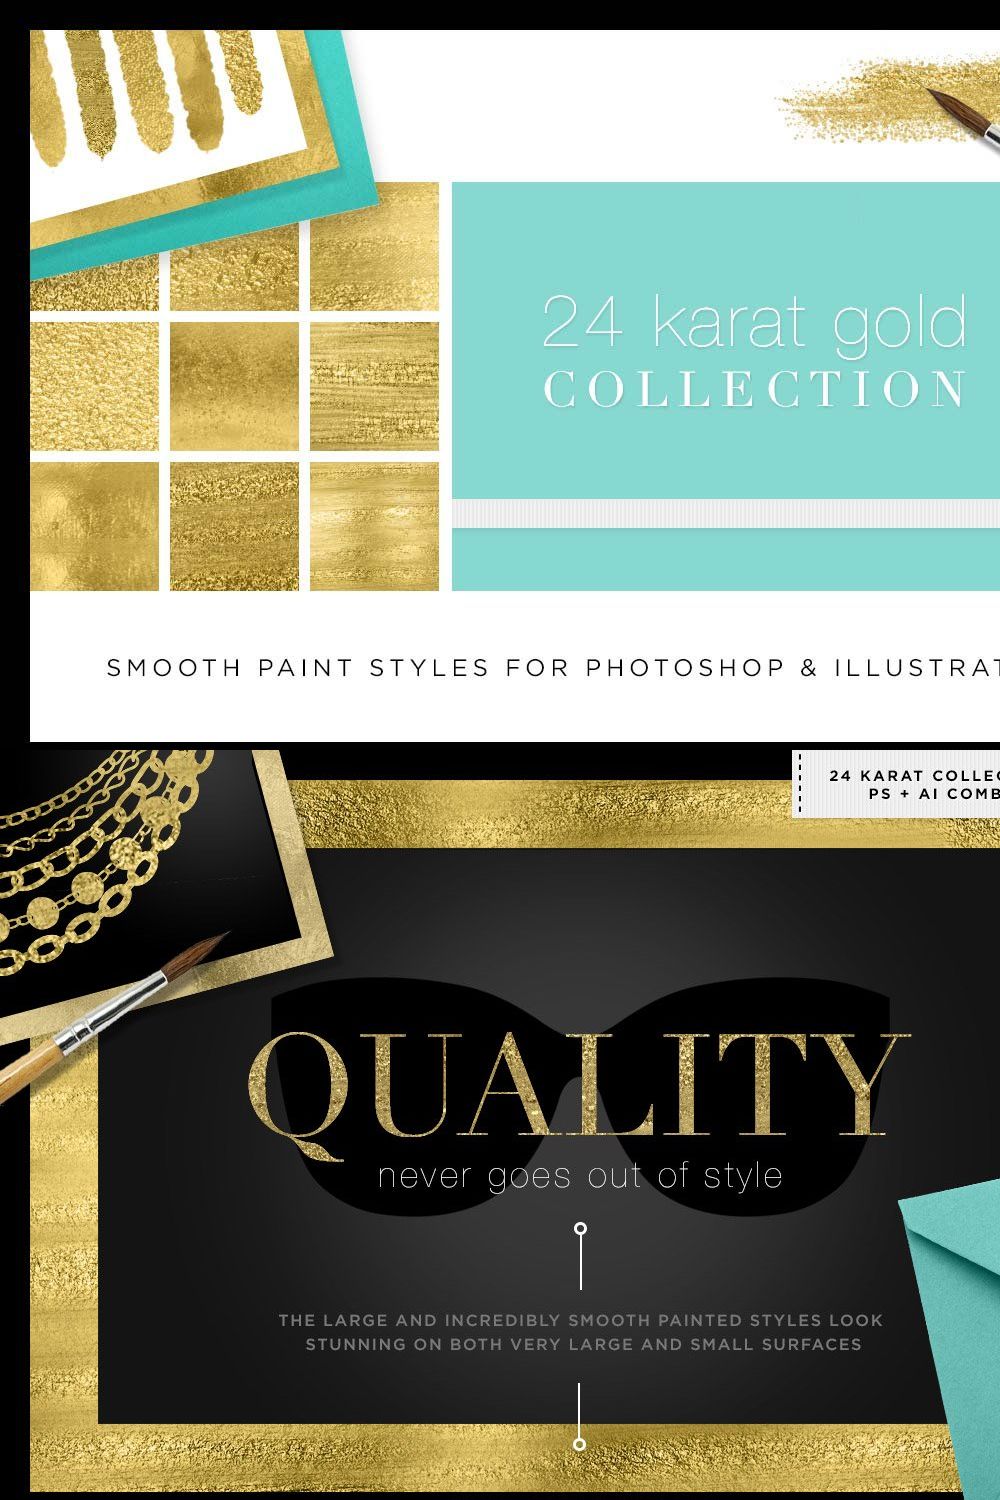 Liquid Gold Paint Textures+Styles pinterest preview image.